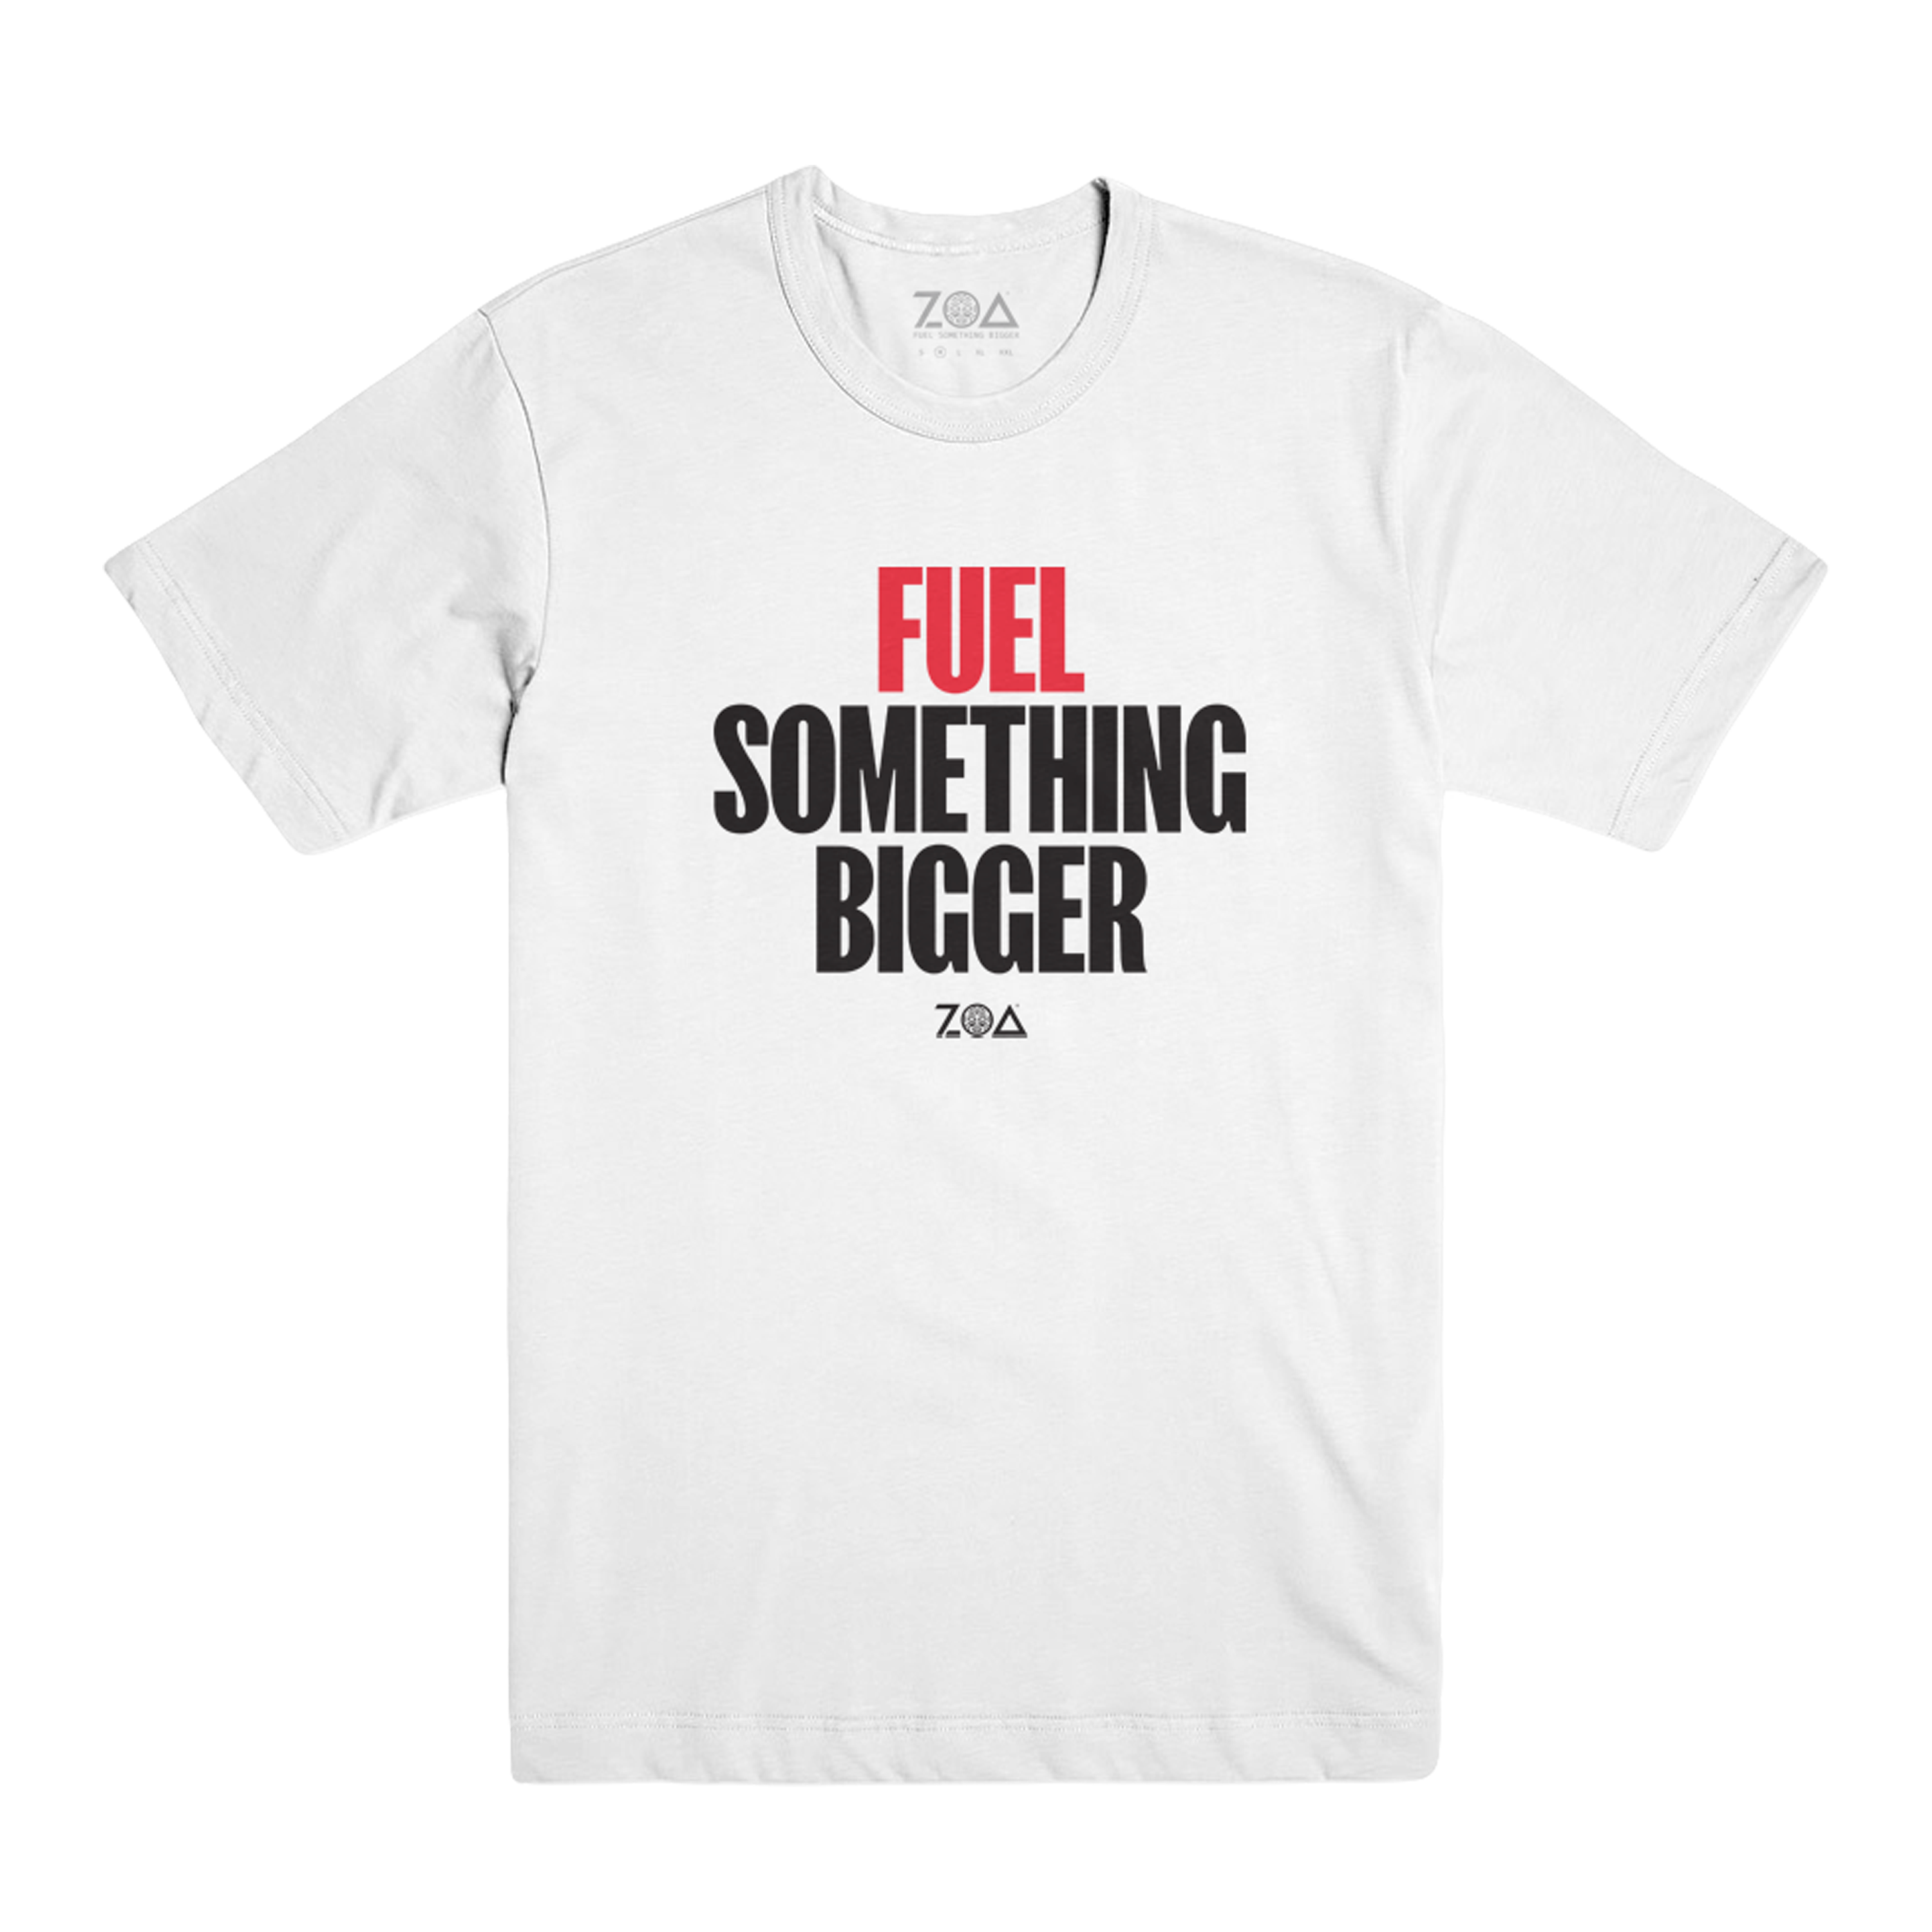 ZOA "Fuel Something Bigger" Unisex T-Shirt